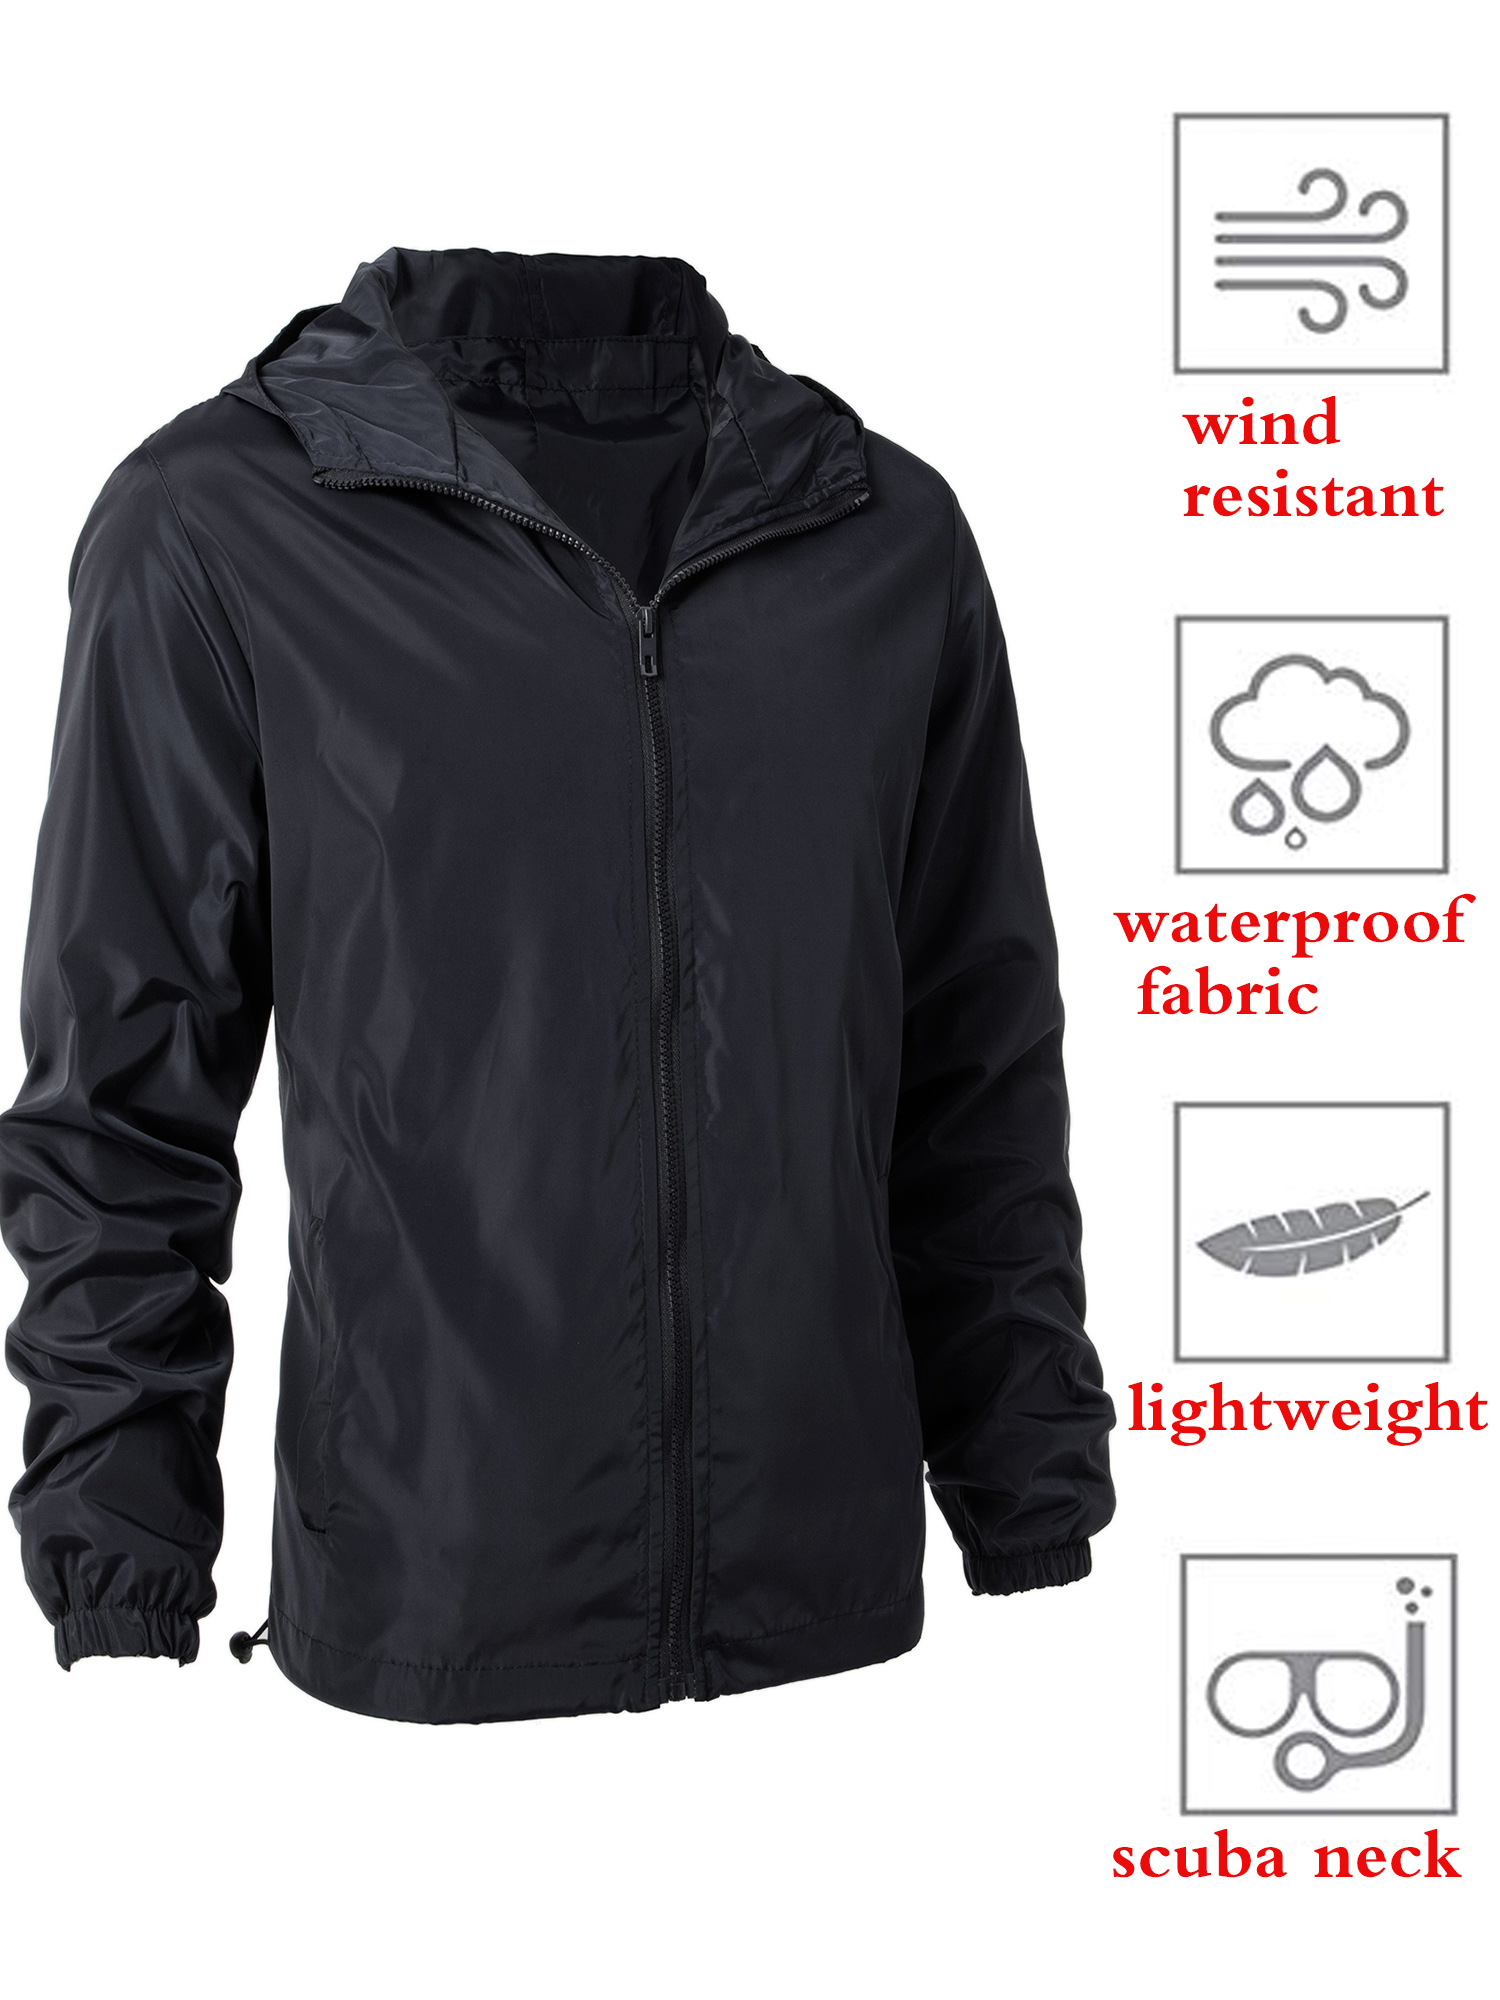 Youloveit Men's Winter Lightweight Jacket Windbreaker Waterproof Hooded Jackets Outdoor Sport Rain Jacket, Zip Up & Water-Resistant Size 4XL-7XL - image 5 of 8